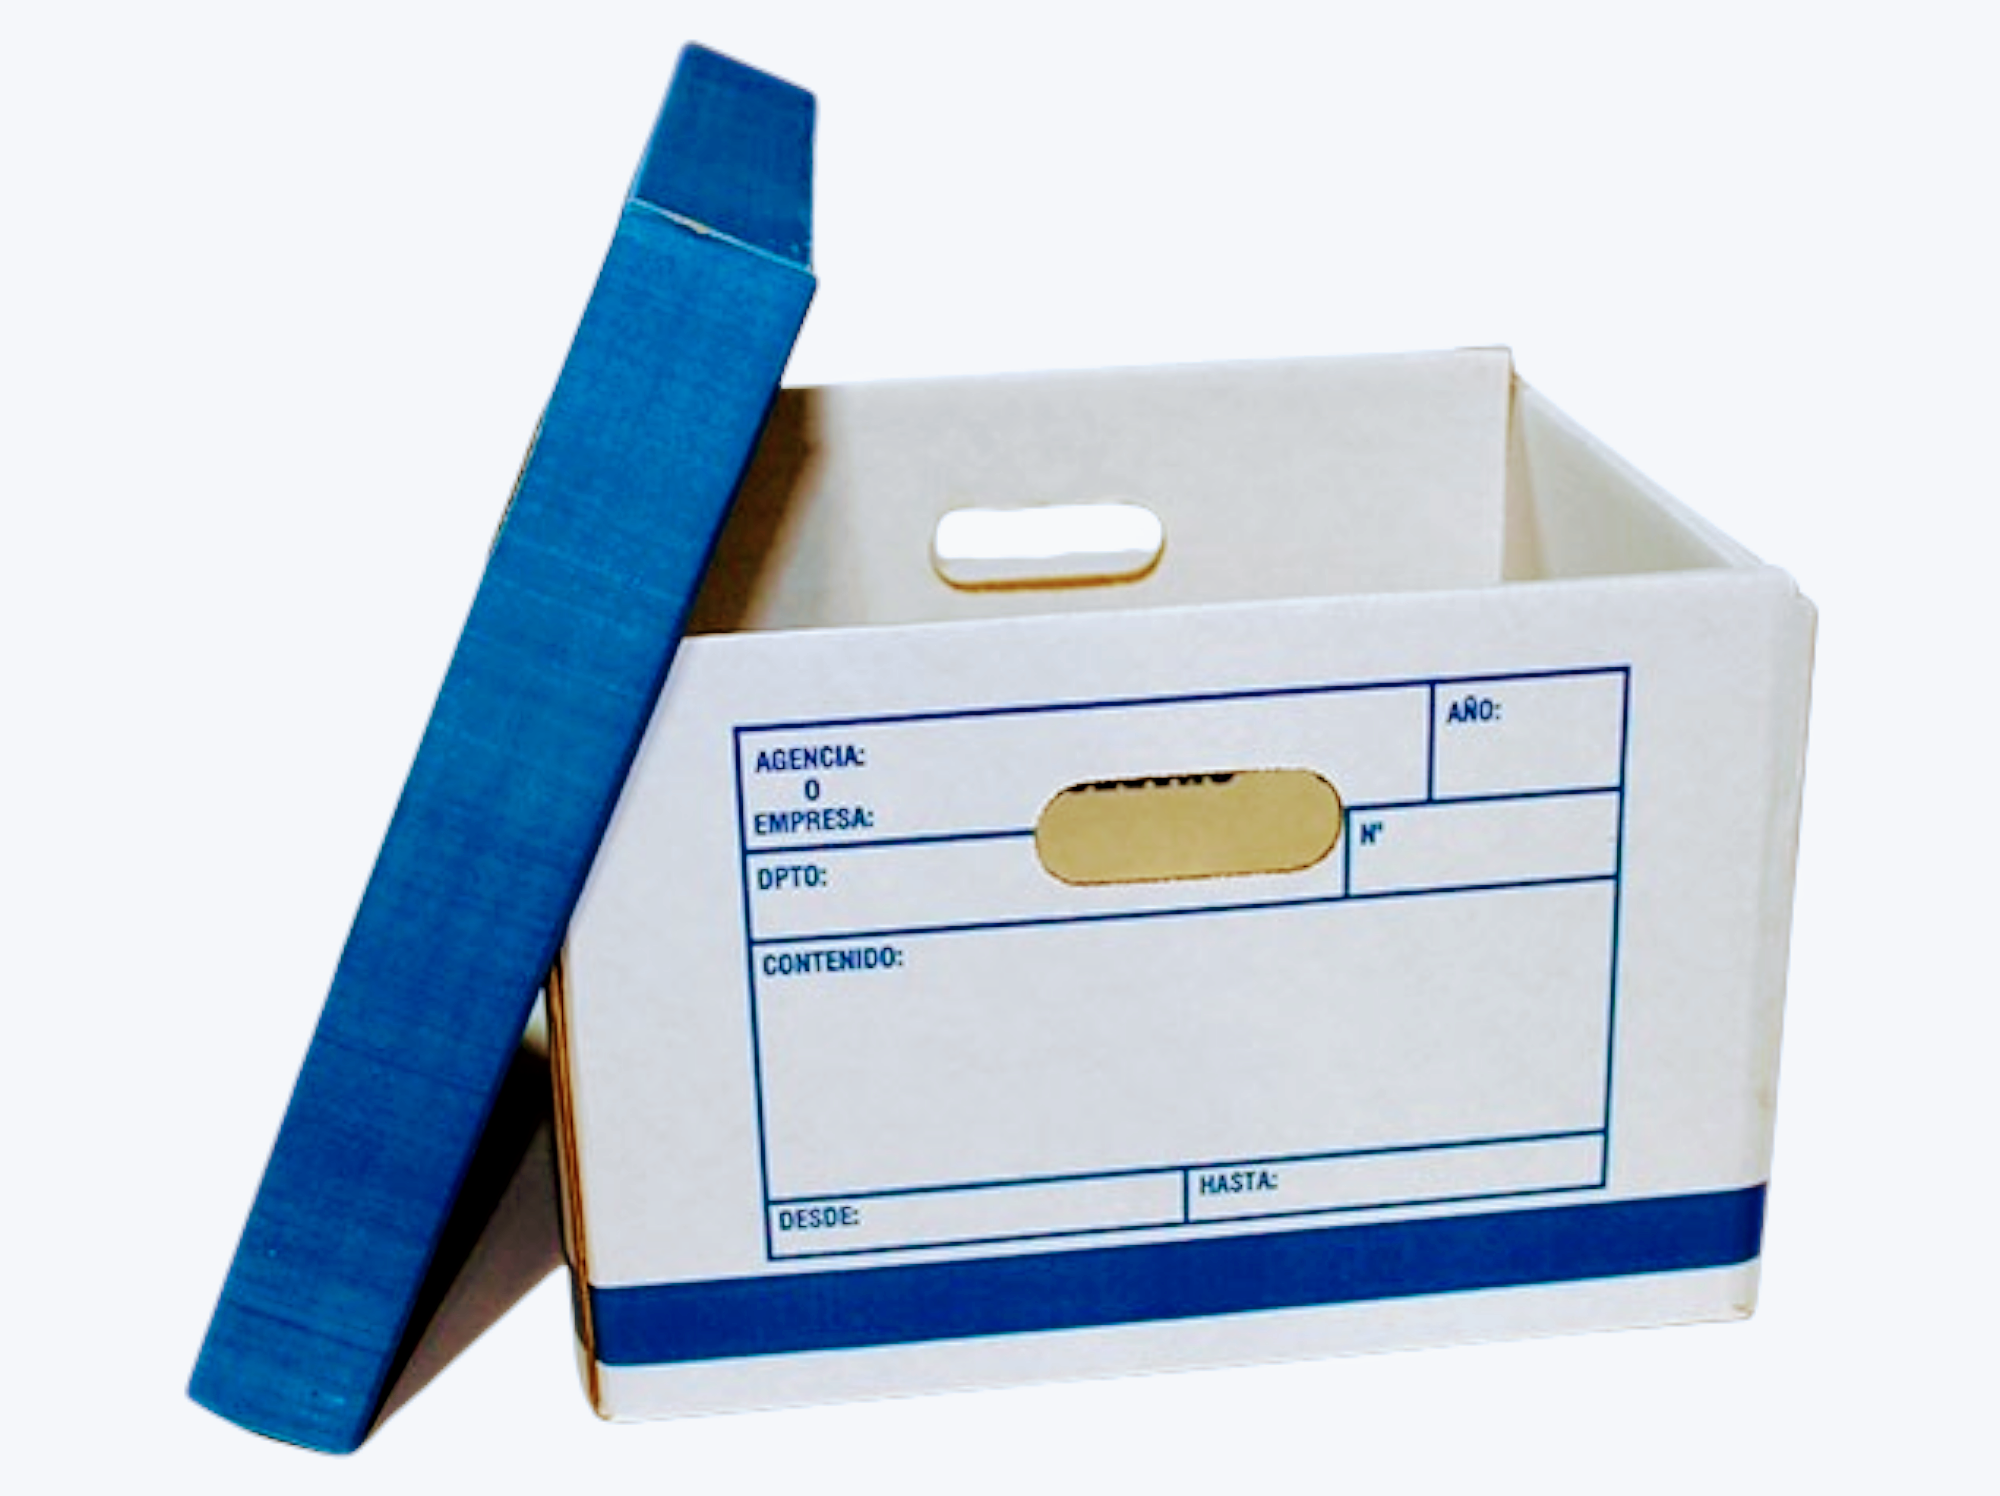 Caja archivadora de cartón 5A Precinto Precinto ONBBOX